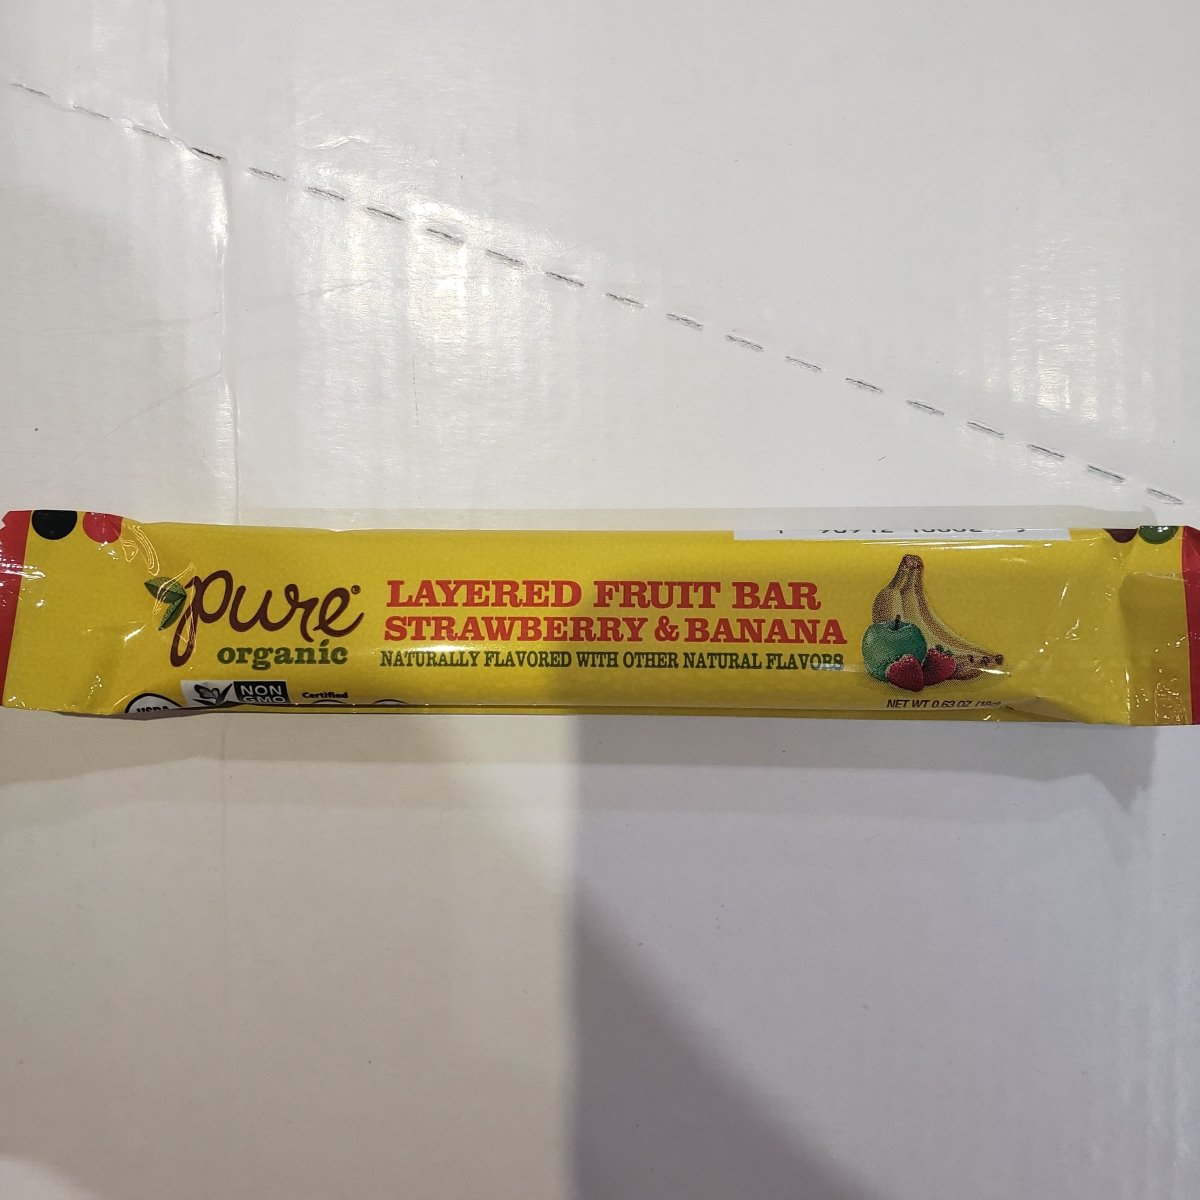 Layered Fruit Bars - Strawberry Banana - Snack - 1 Bar .63oz